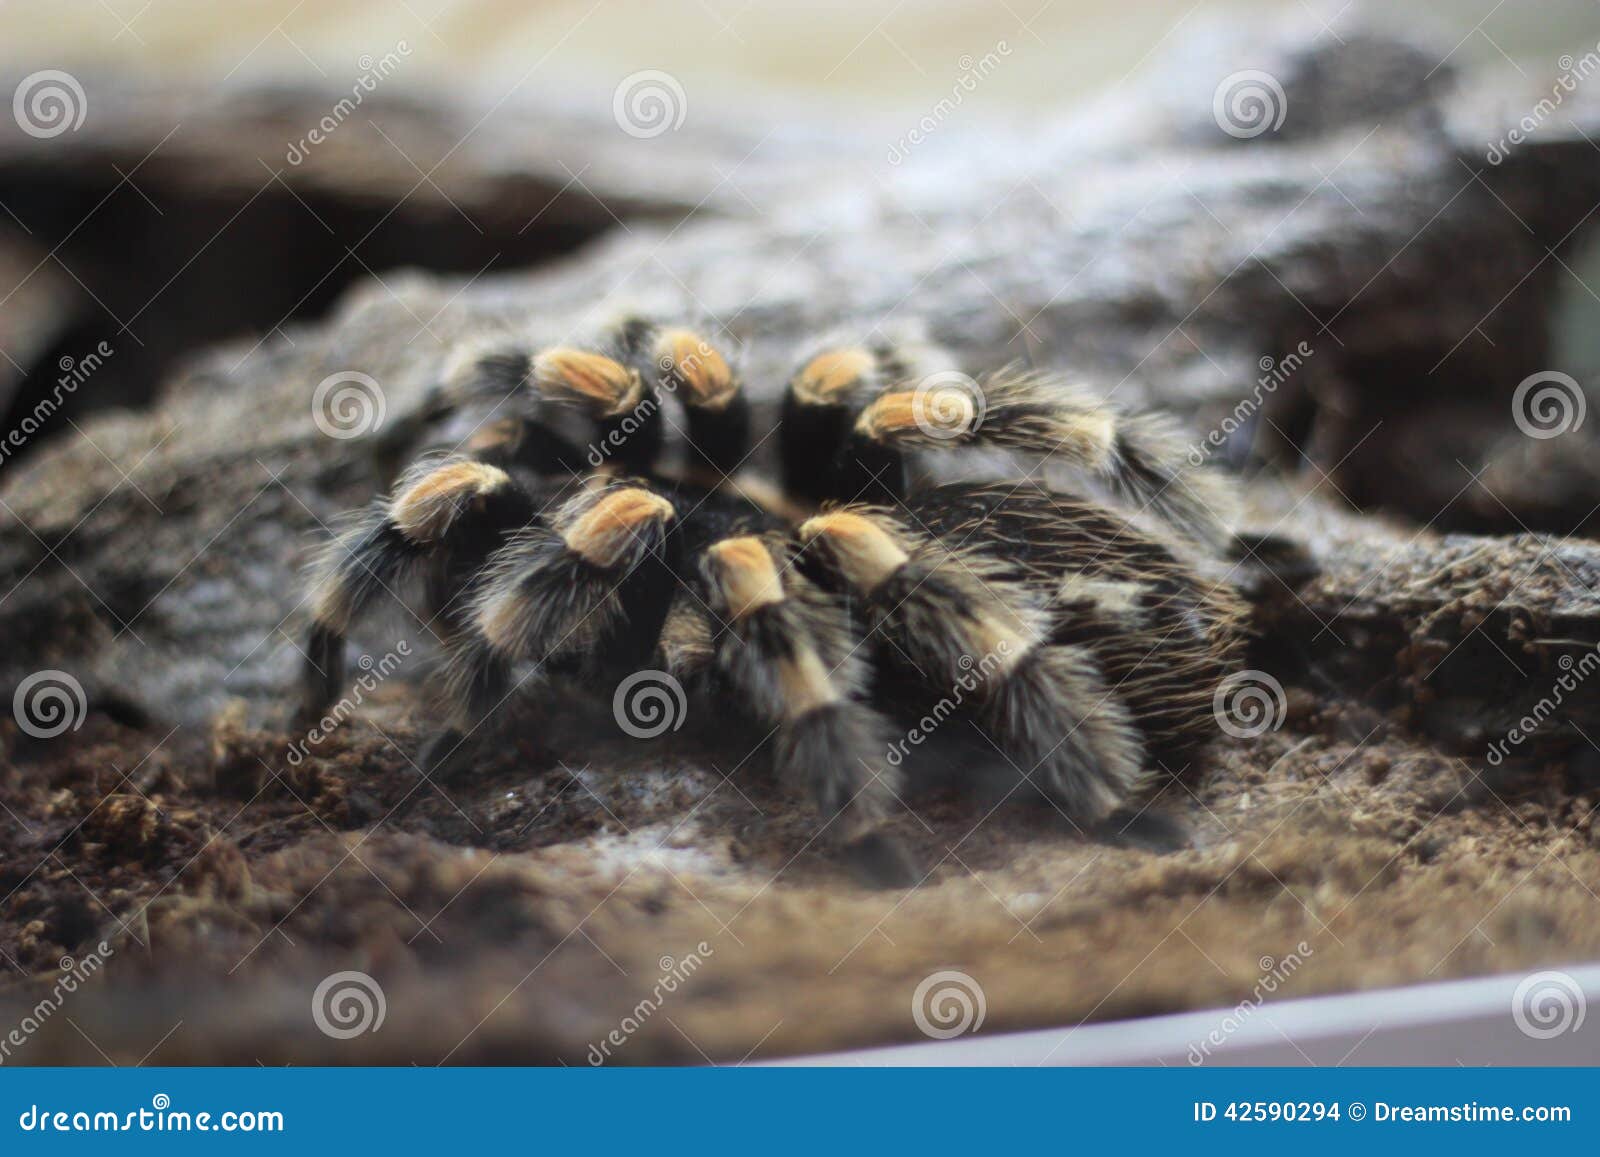 Tarantula Spider stock photo. Image of nature, hairy - 42590294